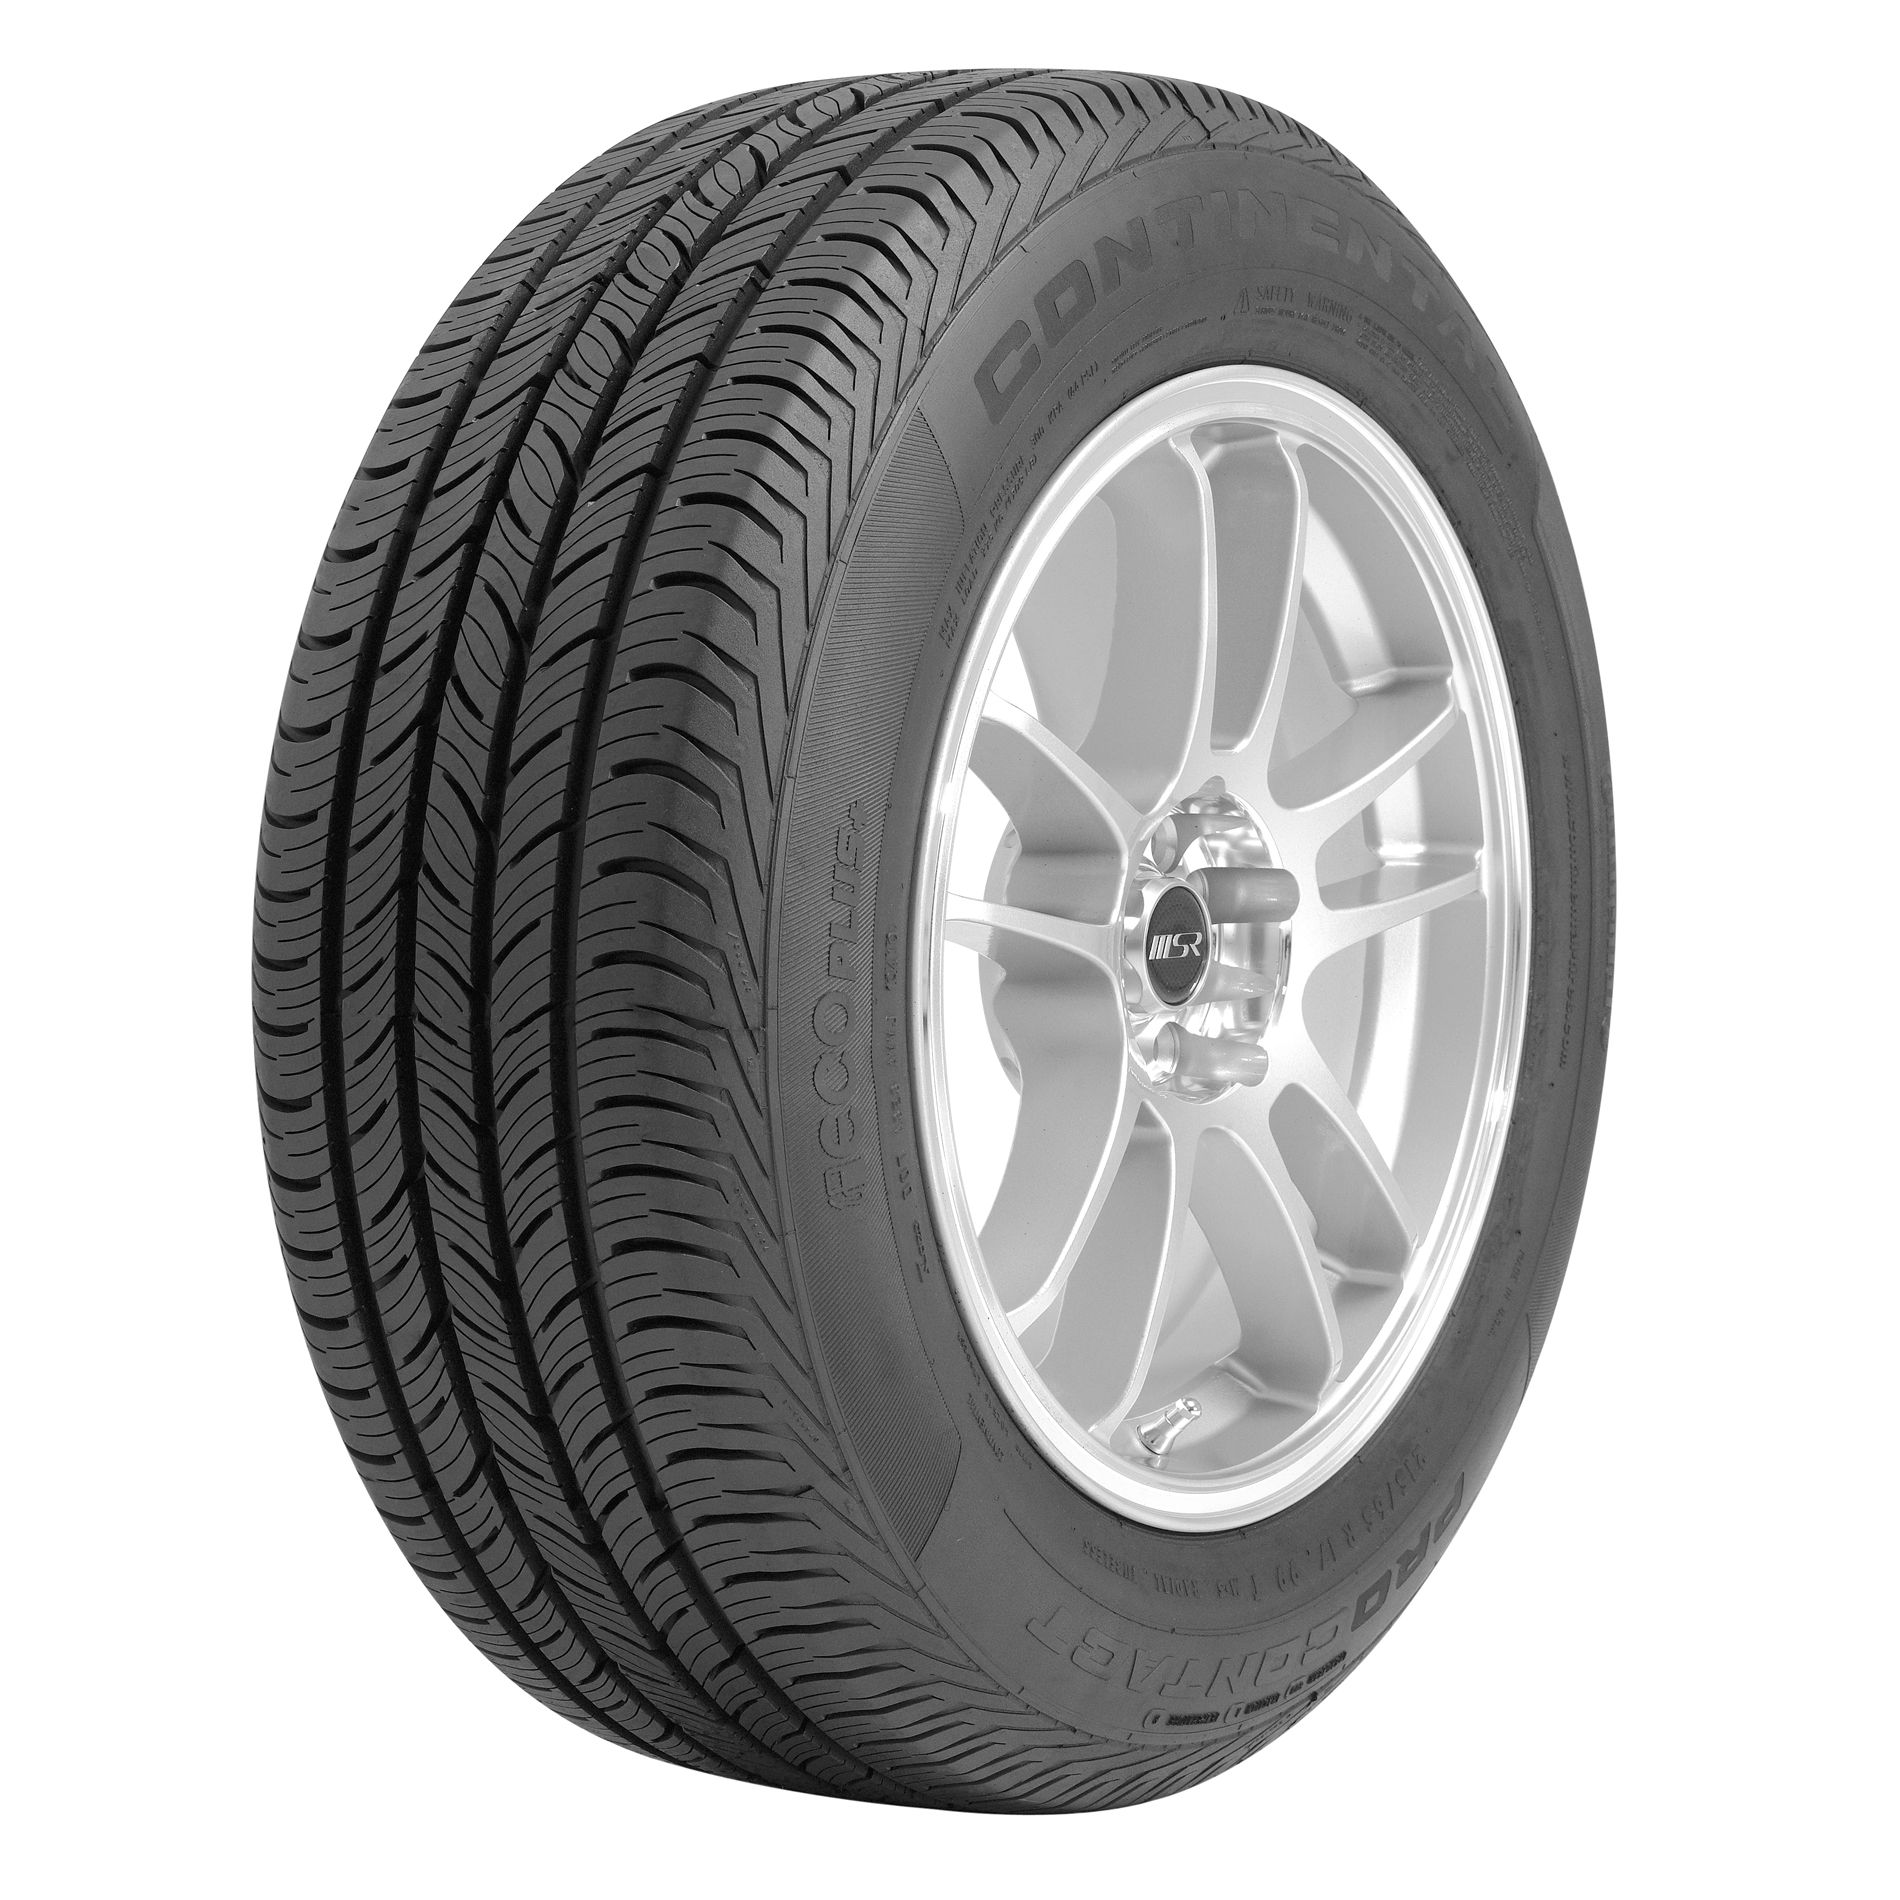 Continental Pro Contact Eco Plus - 205/55R16 91T BW - All-Season Tire